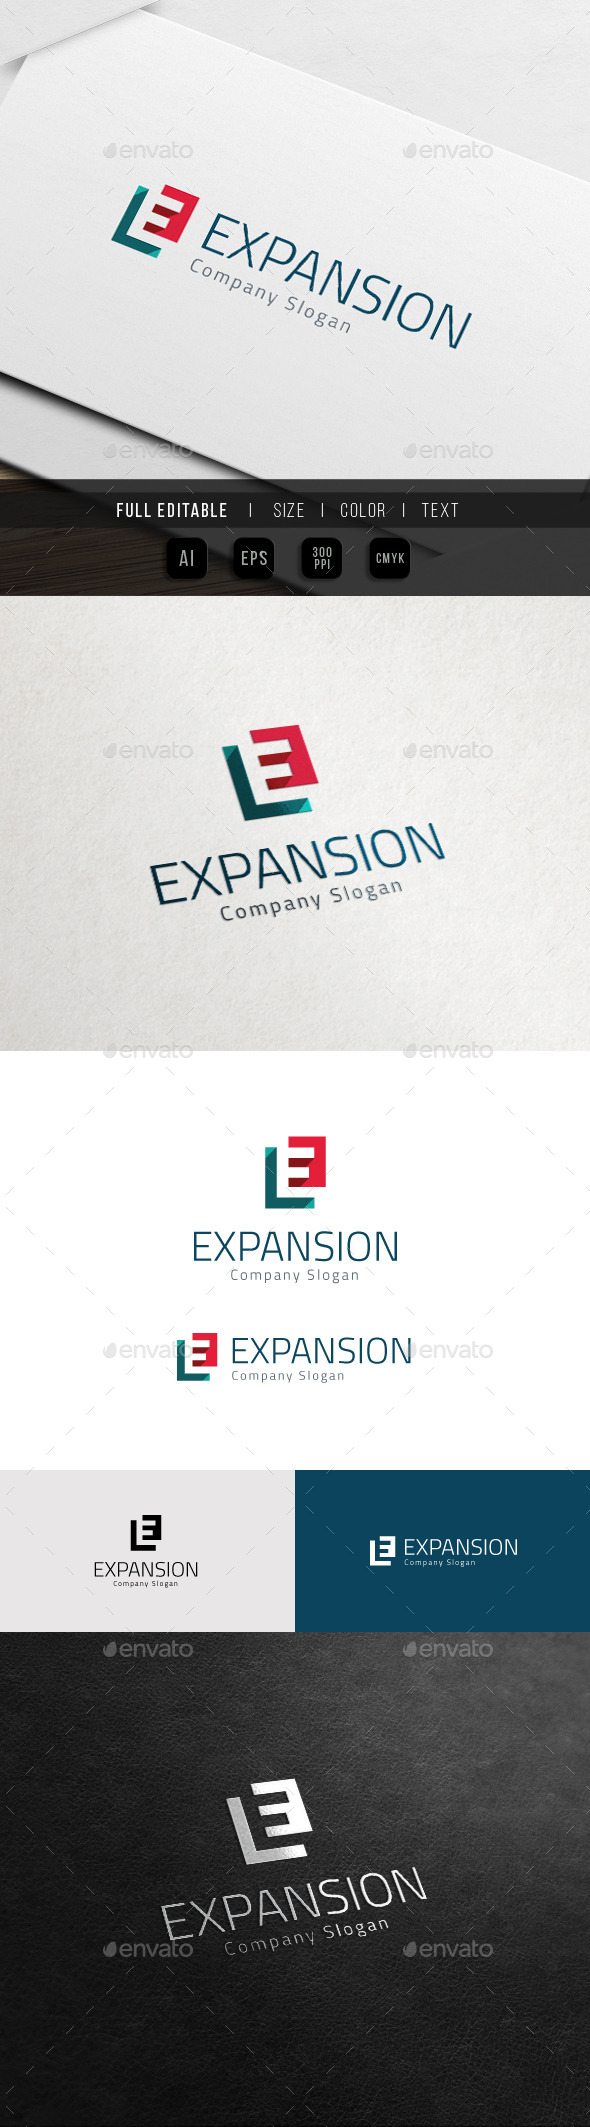 Ex Media - Marketing and Finance - E logo